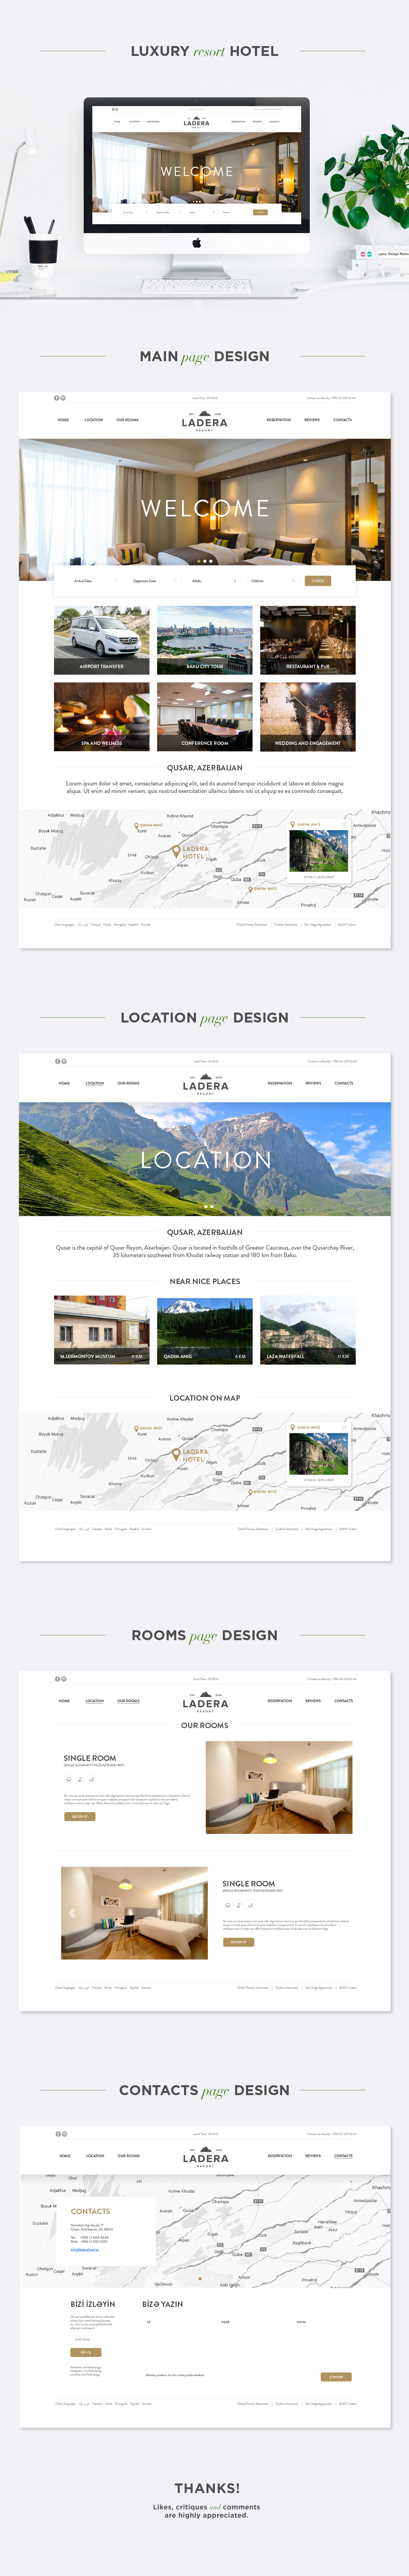 hotel Website luxury landing page Booking azerbaijan baku